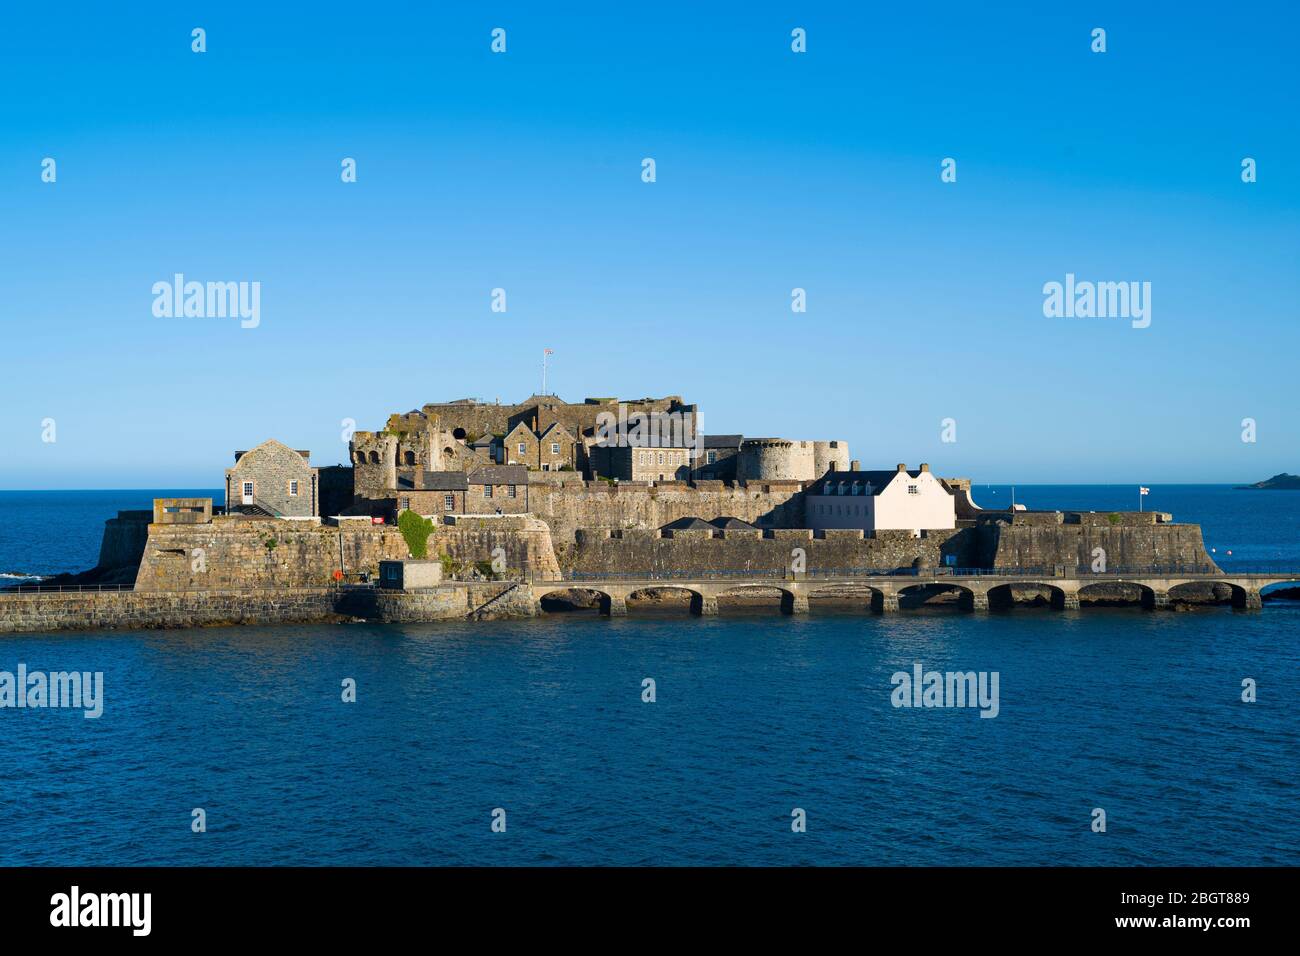 Castle Cornet, St Peter Port, Guernsey, Channel Isles Stock Photo